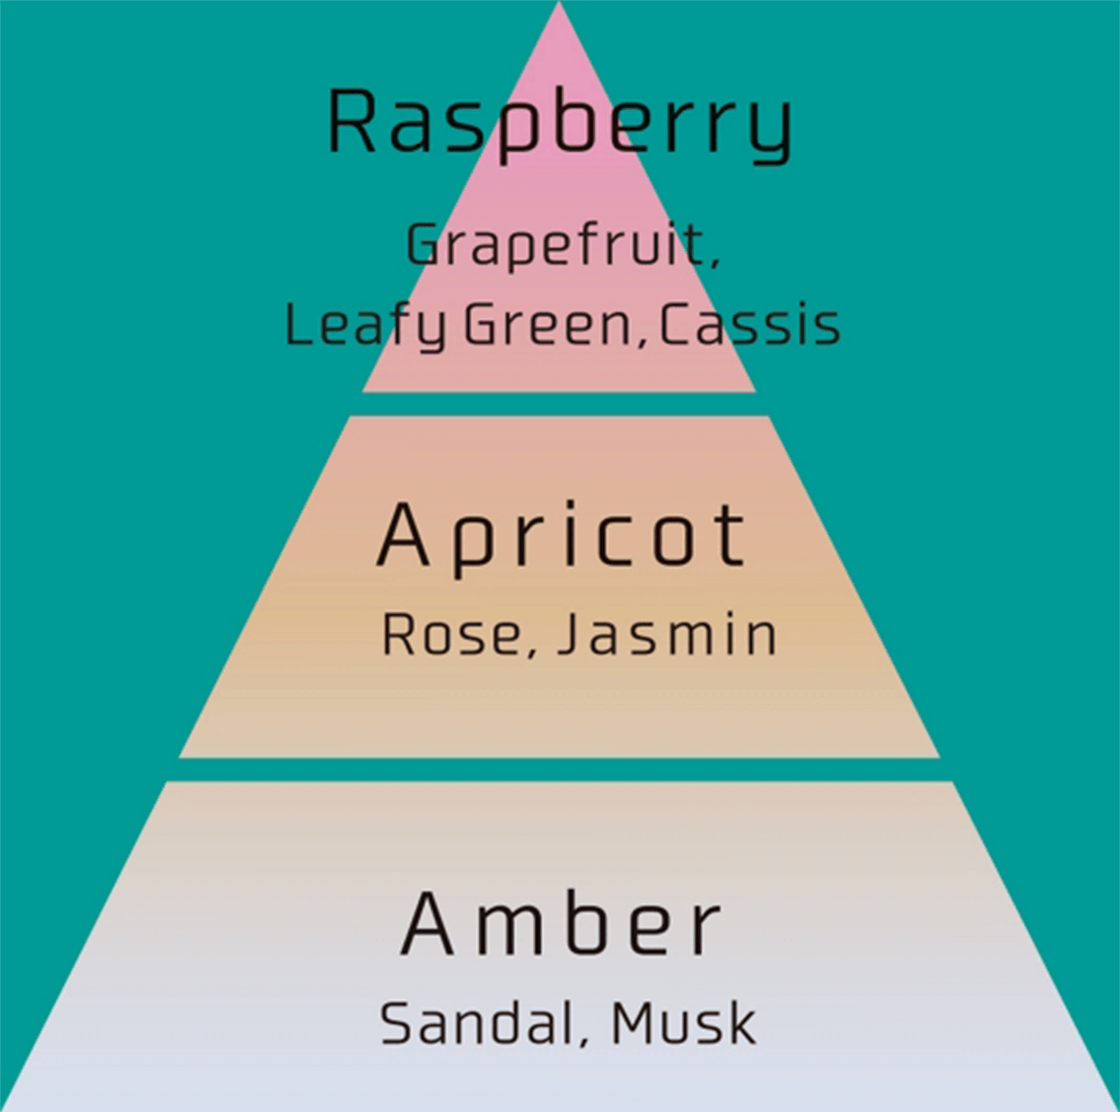 Amber Sandal,Musk Apricot Rose,Jasmin Raspberry Grapefruit,LeafyGreen,Cassis